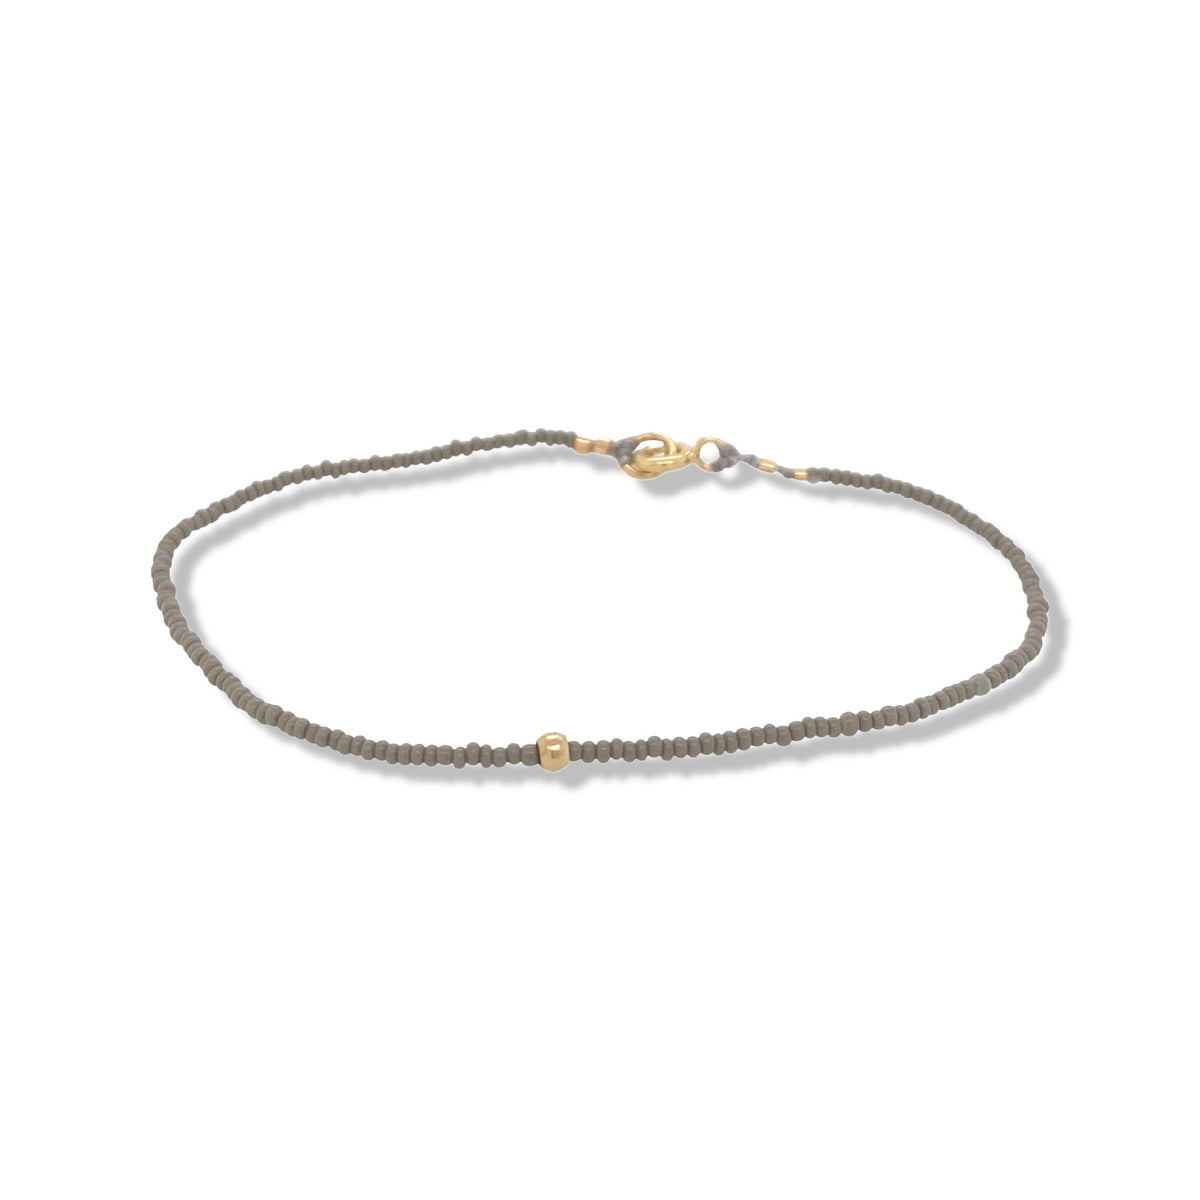 Micro beaded bracelet in Charcoal | Keely Smith Jewelry | Nantucket